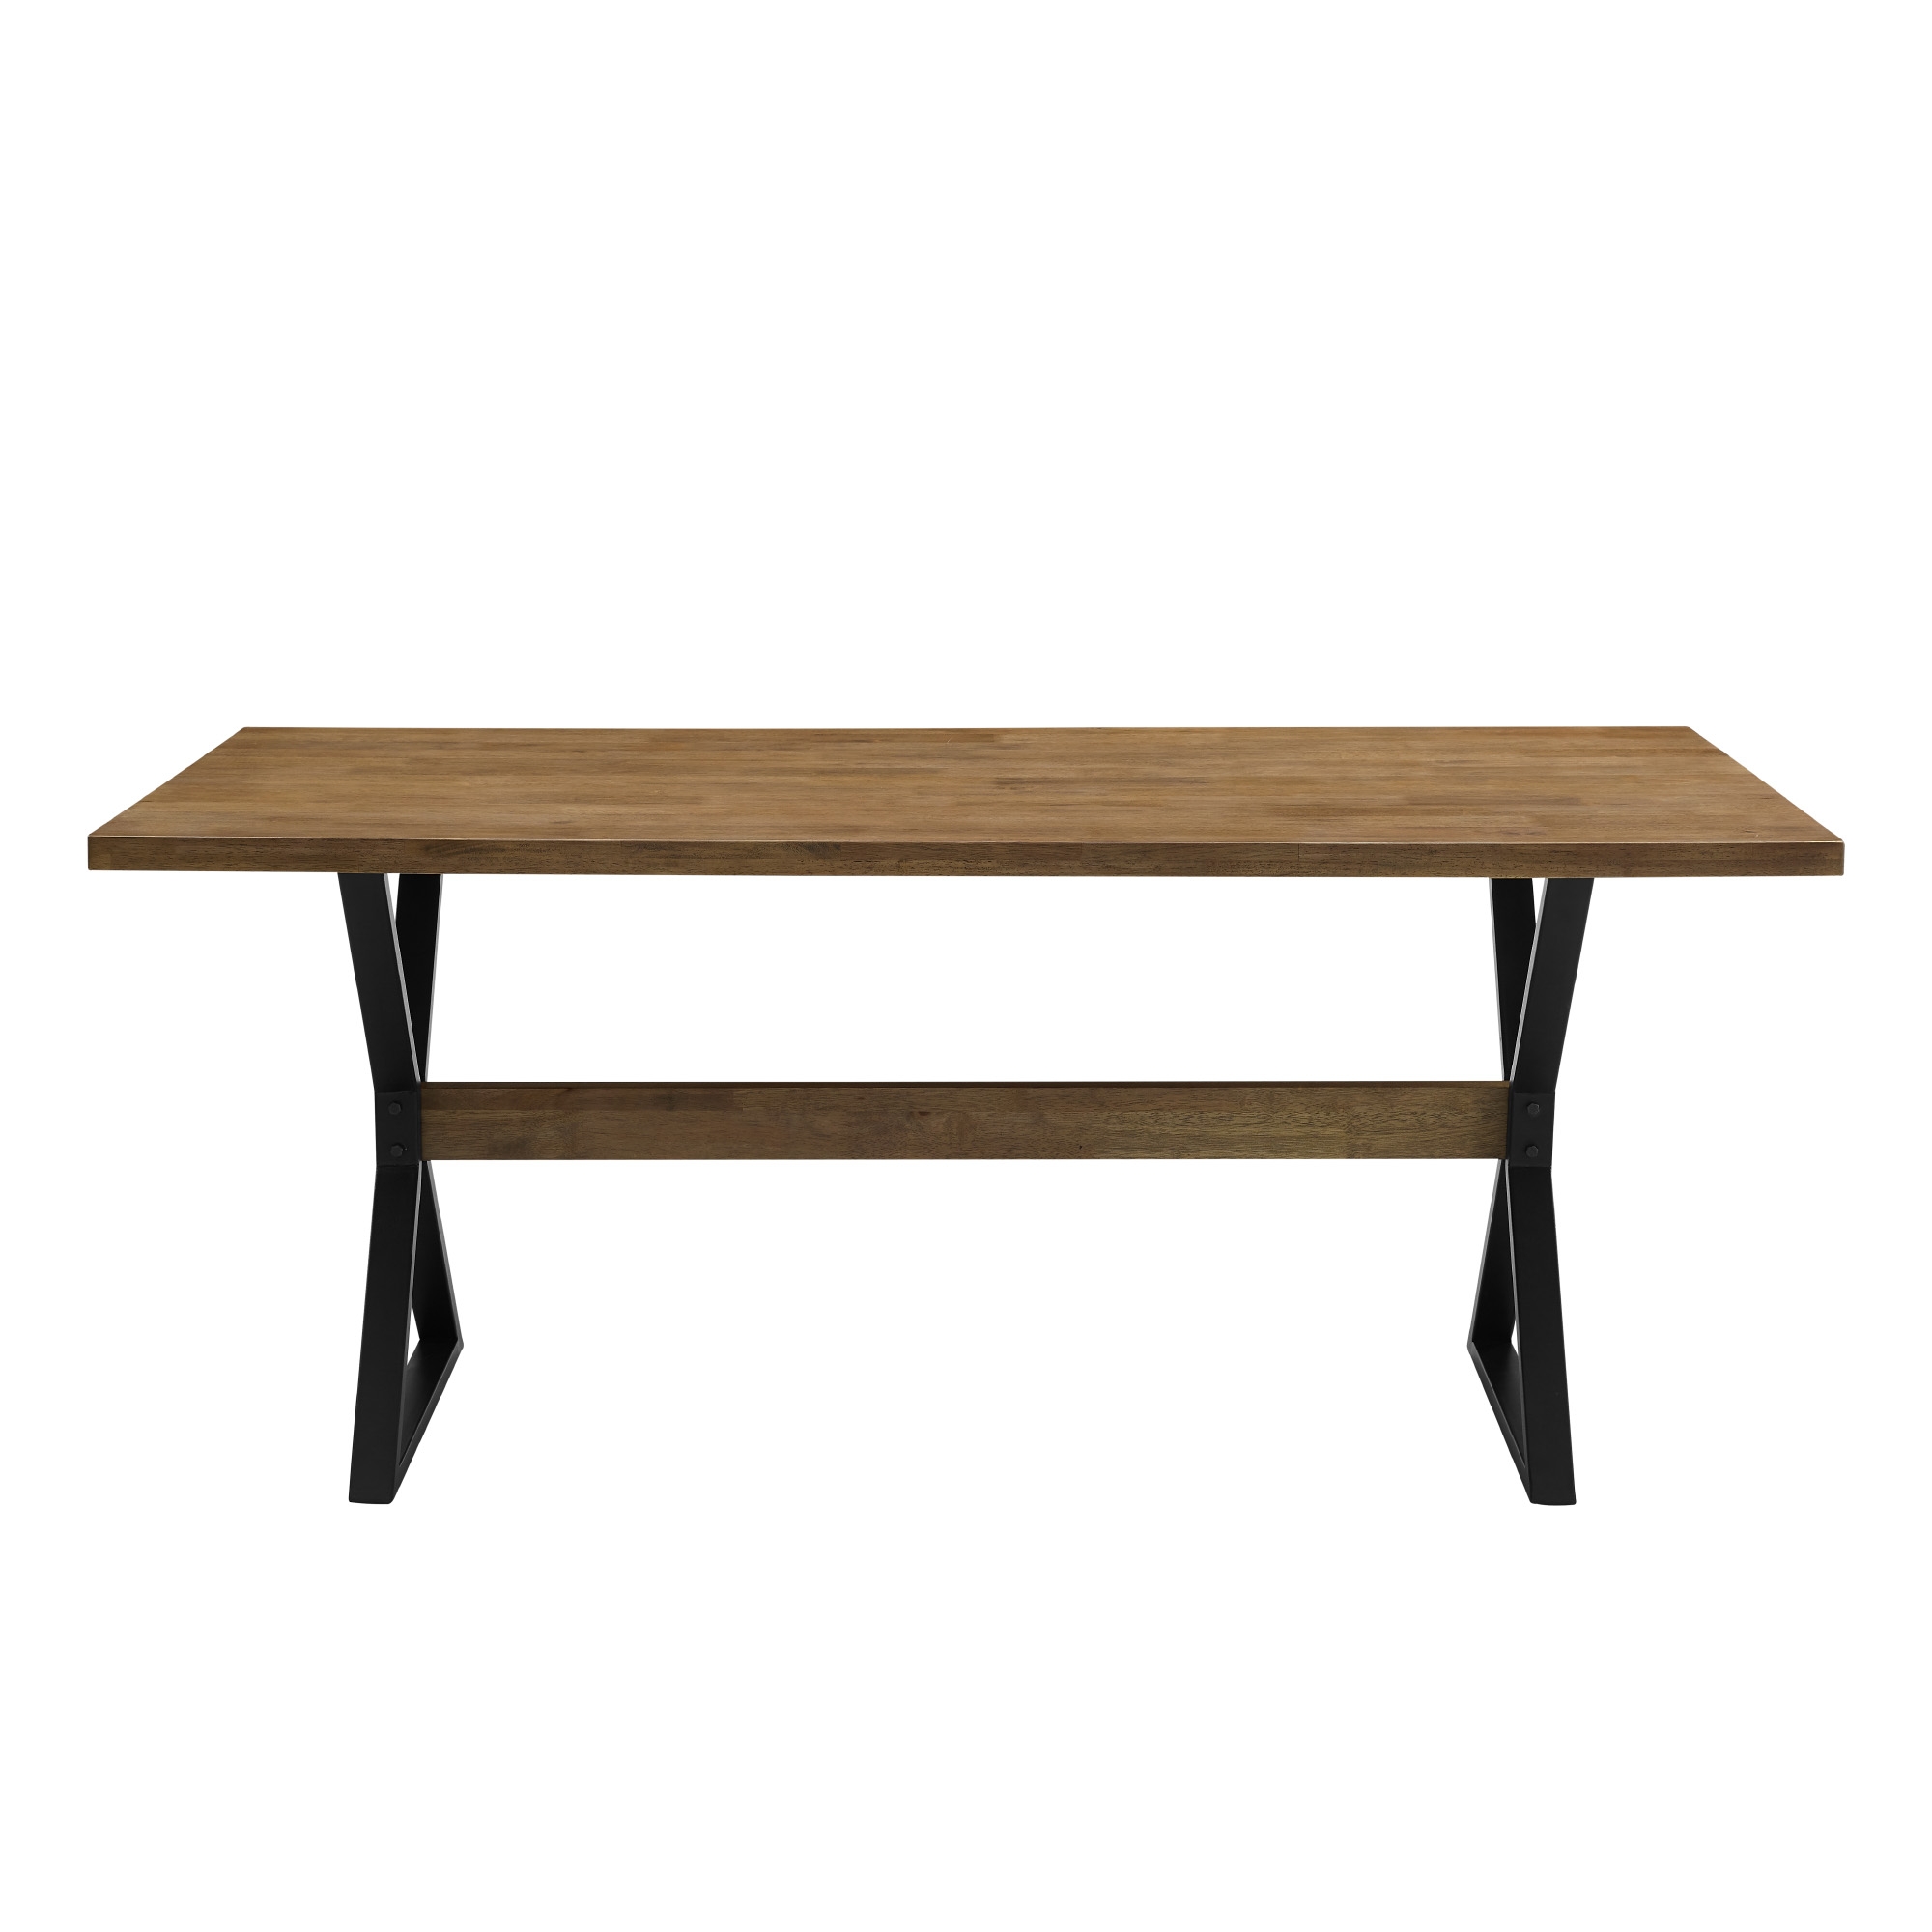 Amherst 72" X Leg Dining Table - Rustic Oak - Image 3